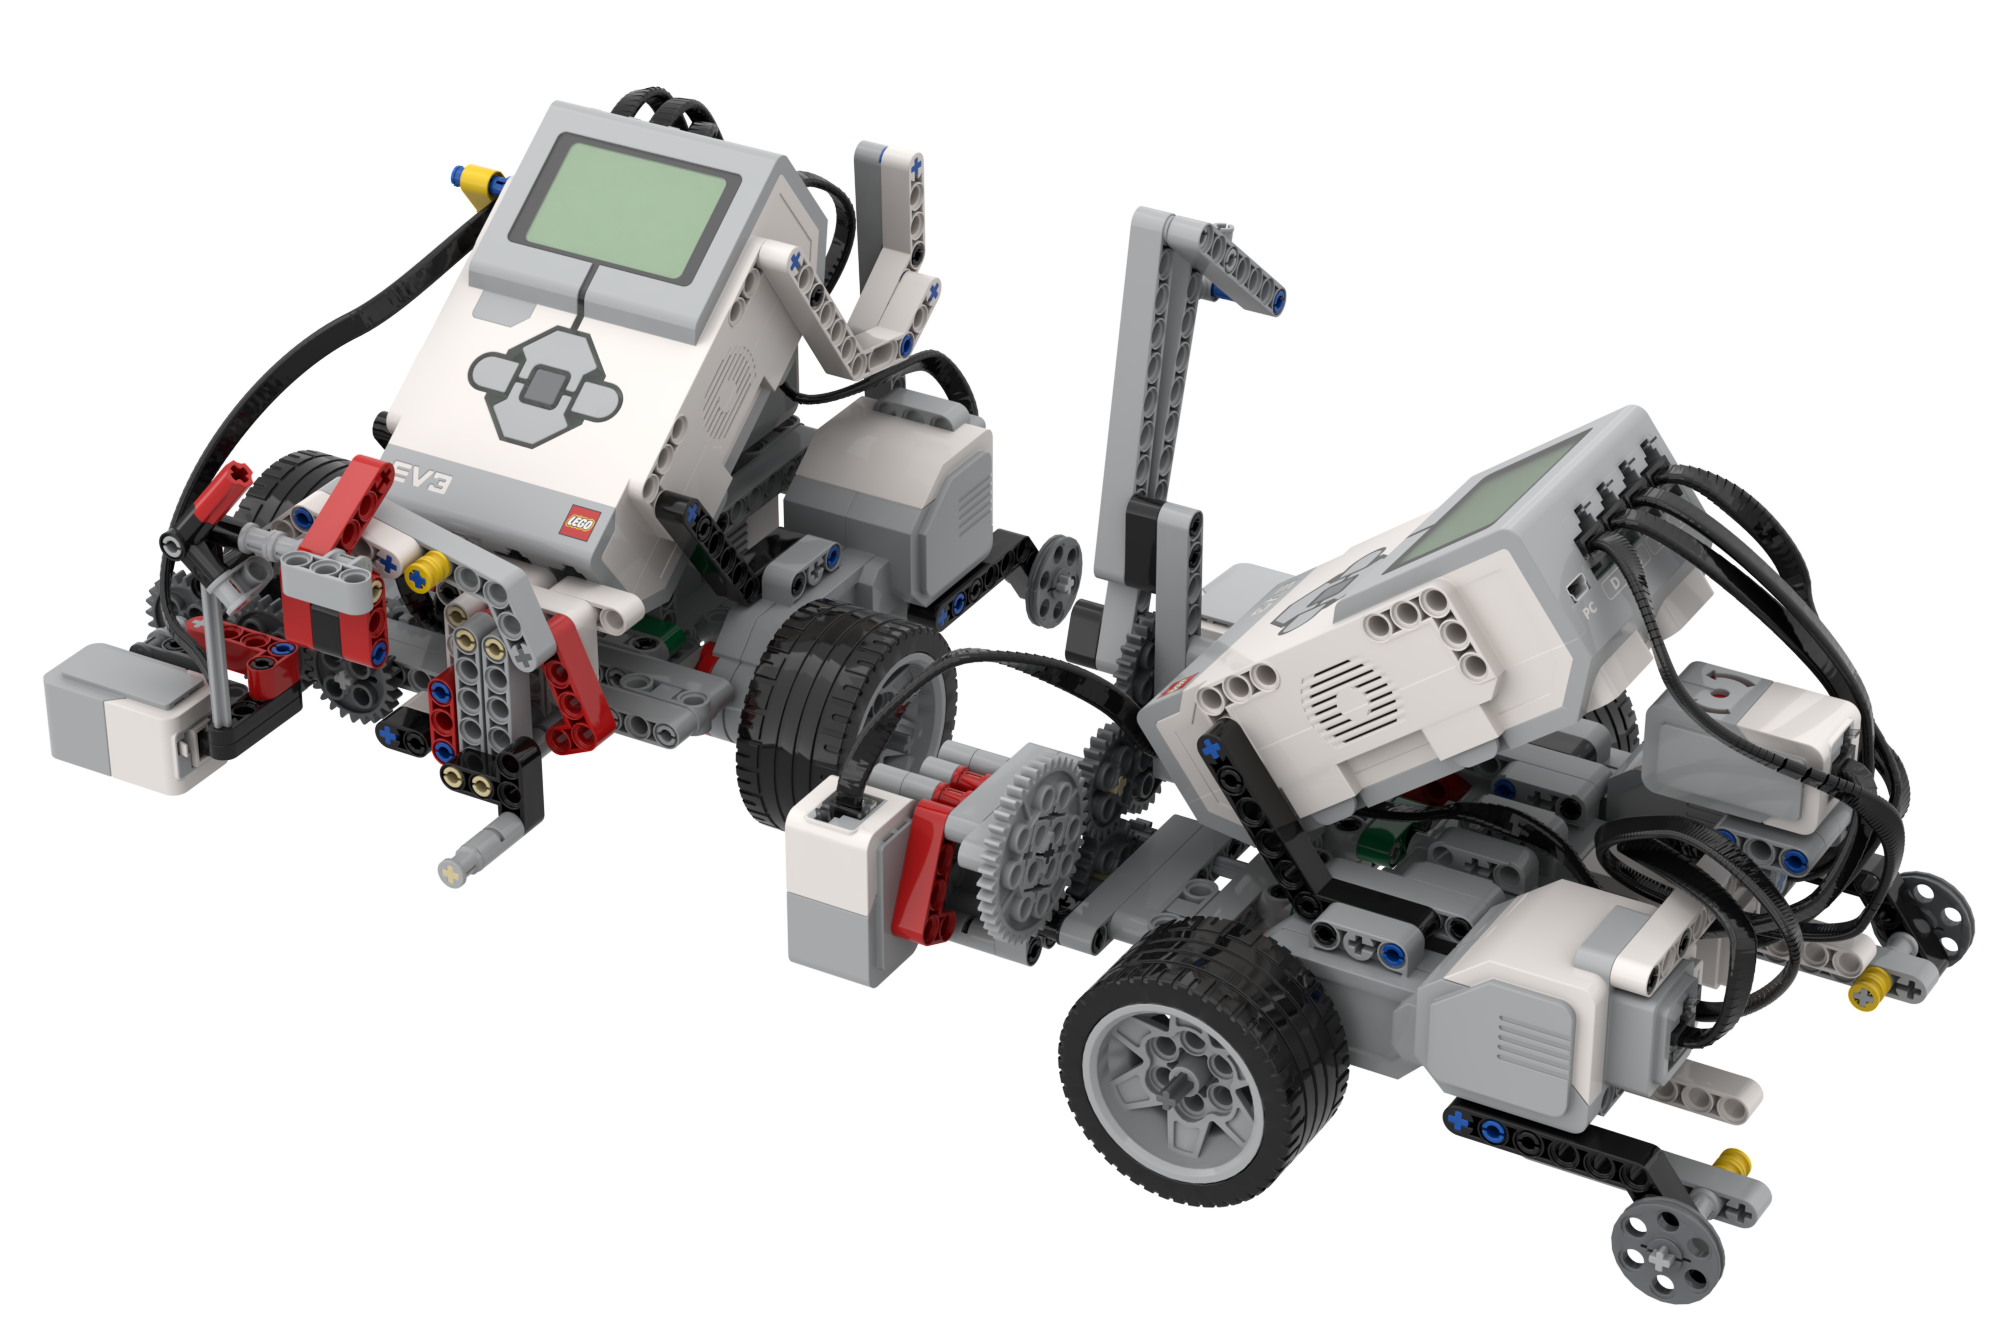 Ramon – The Rescue Robot (EV3) - 2022 Junior